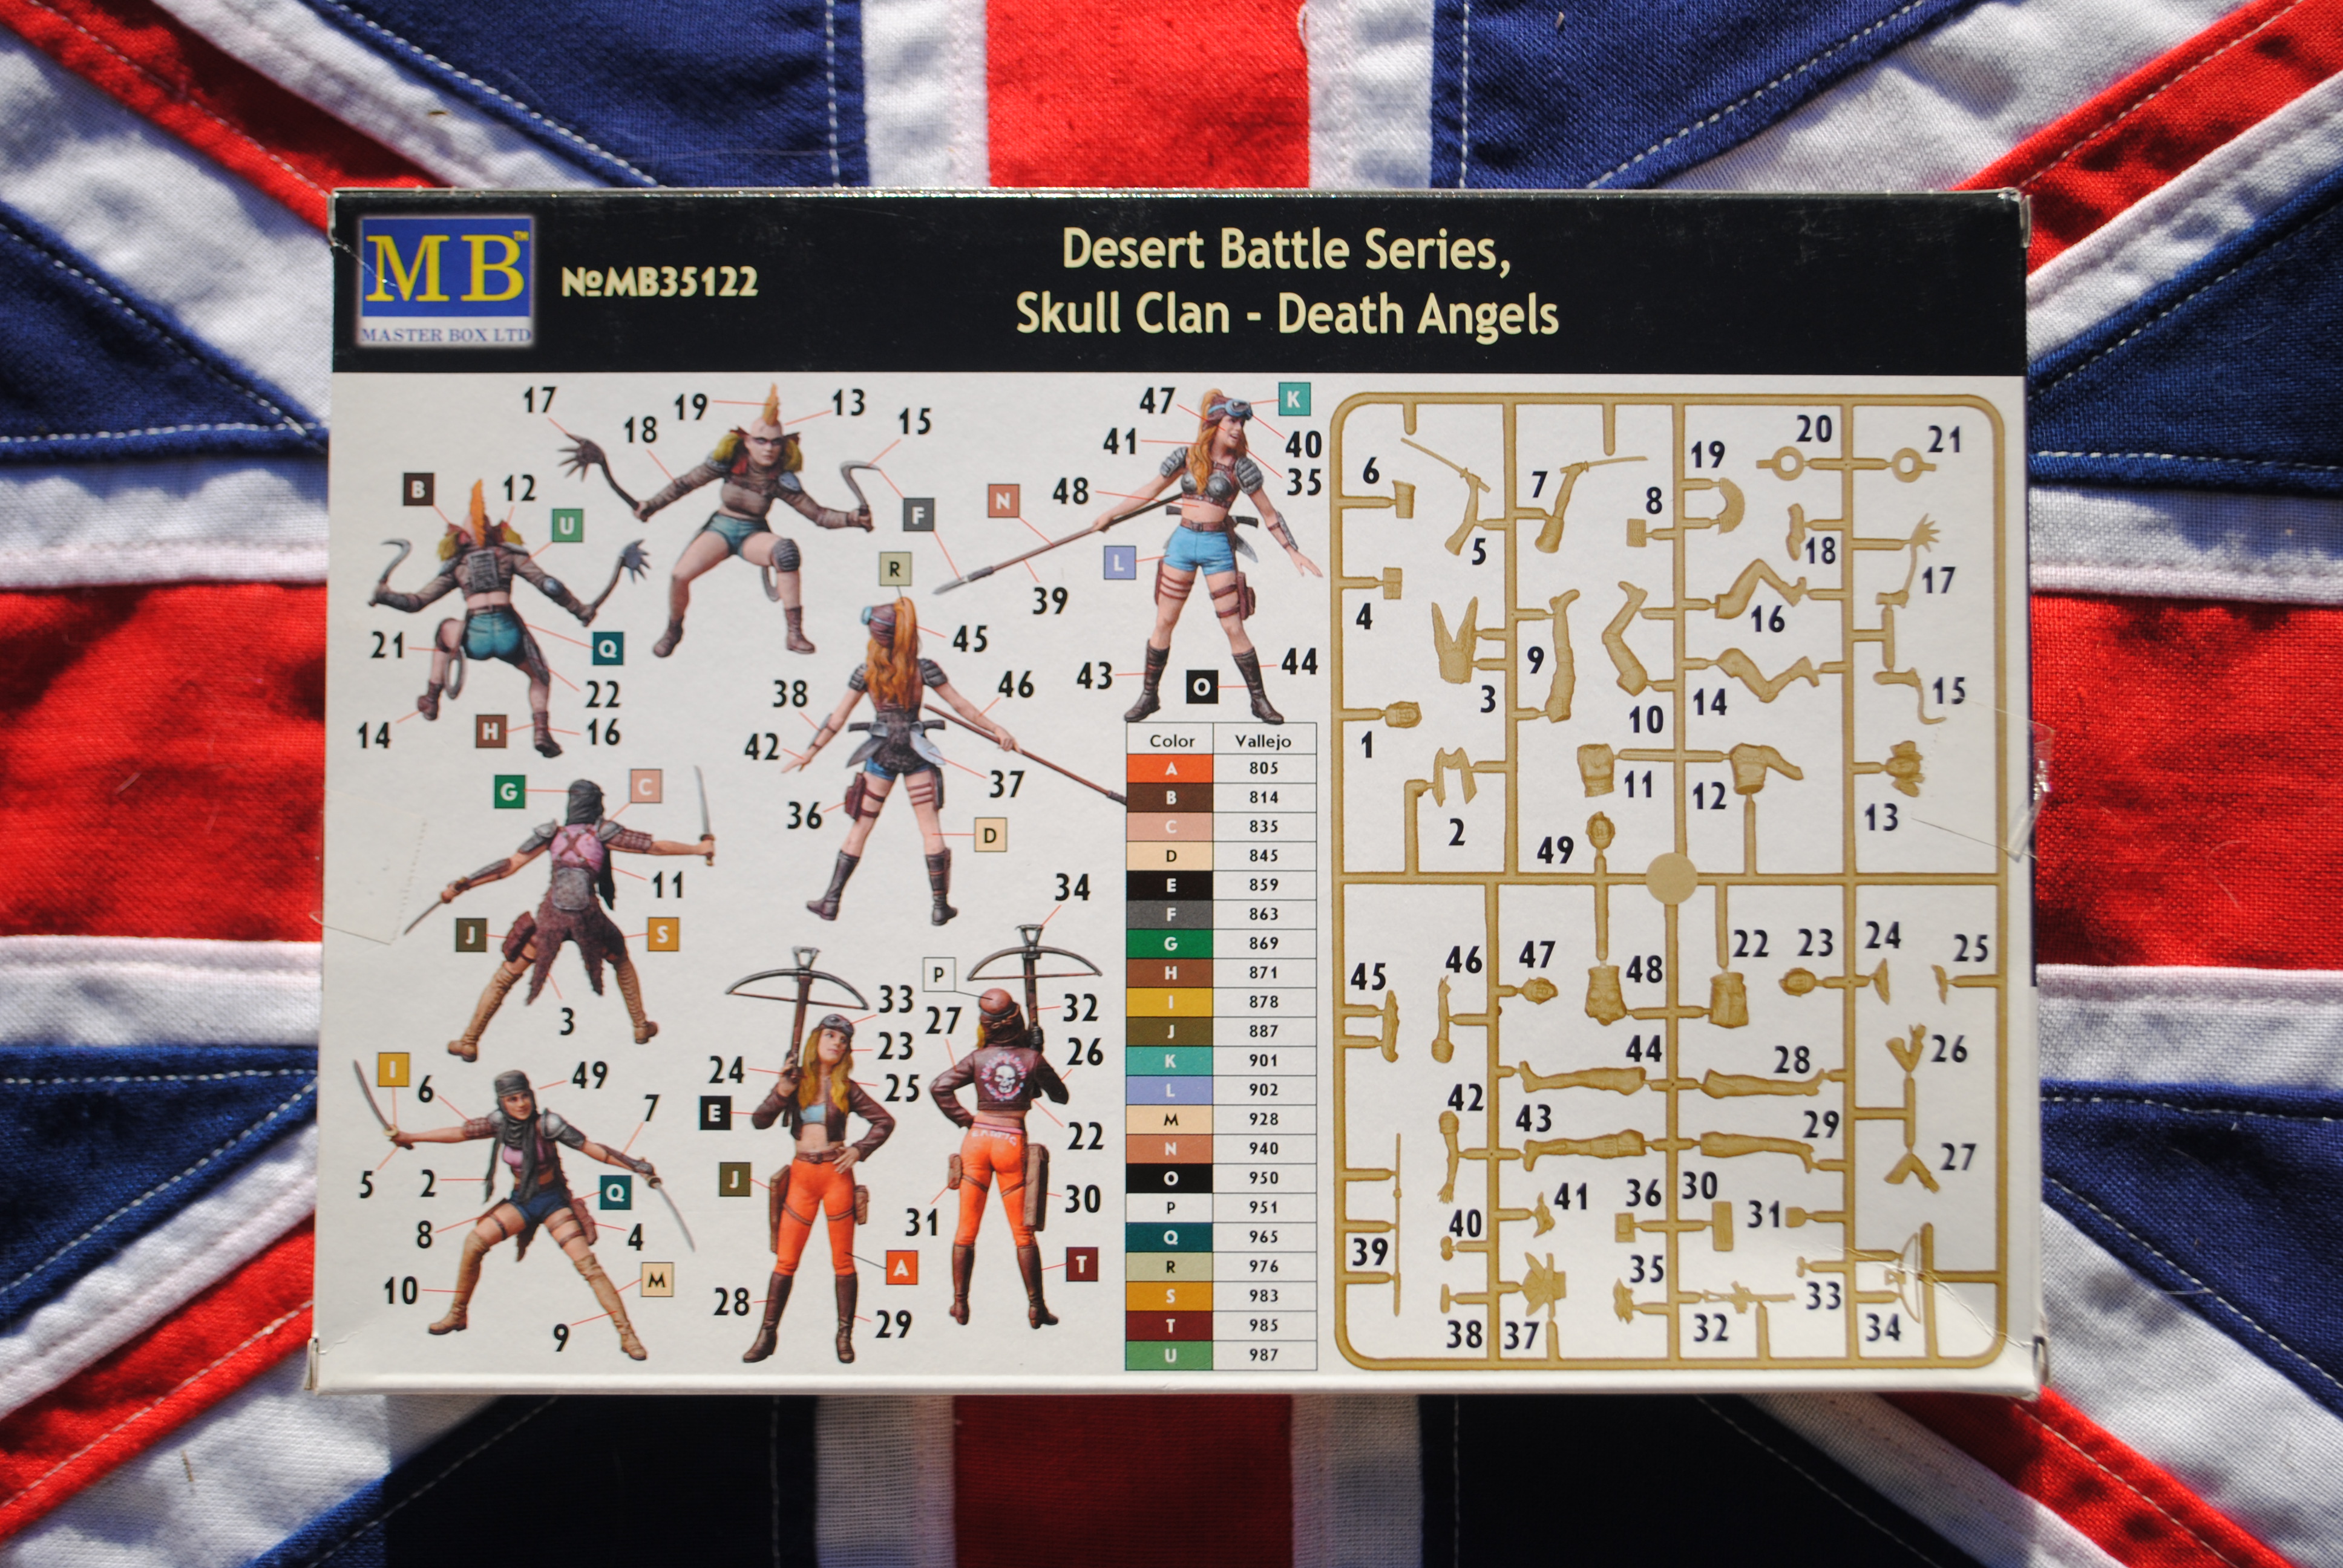 Master Box MB35122 Skull Clan - Death Angels - Desert Battle Series